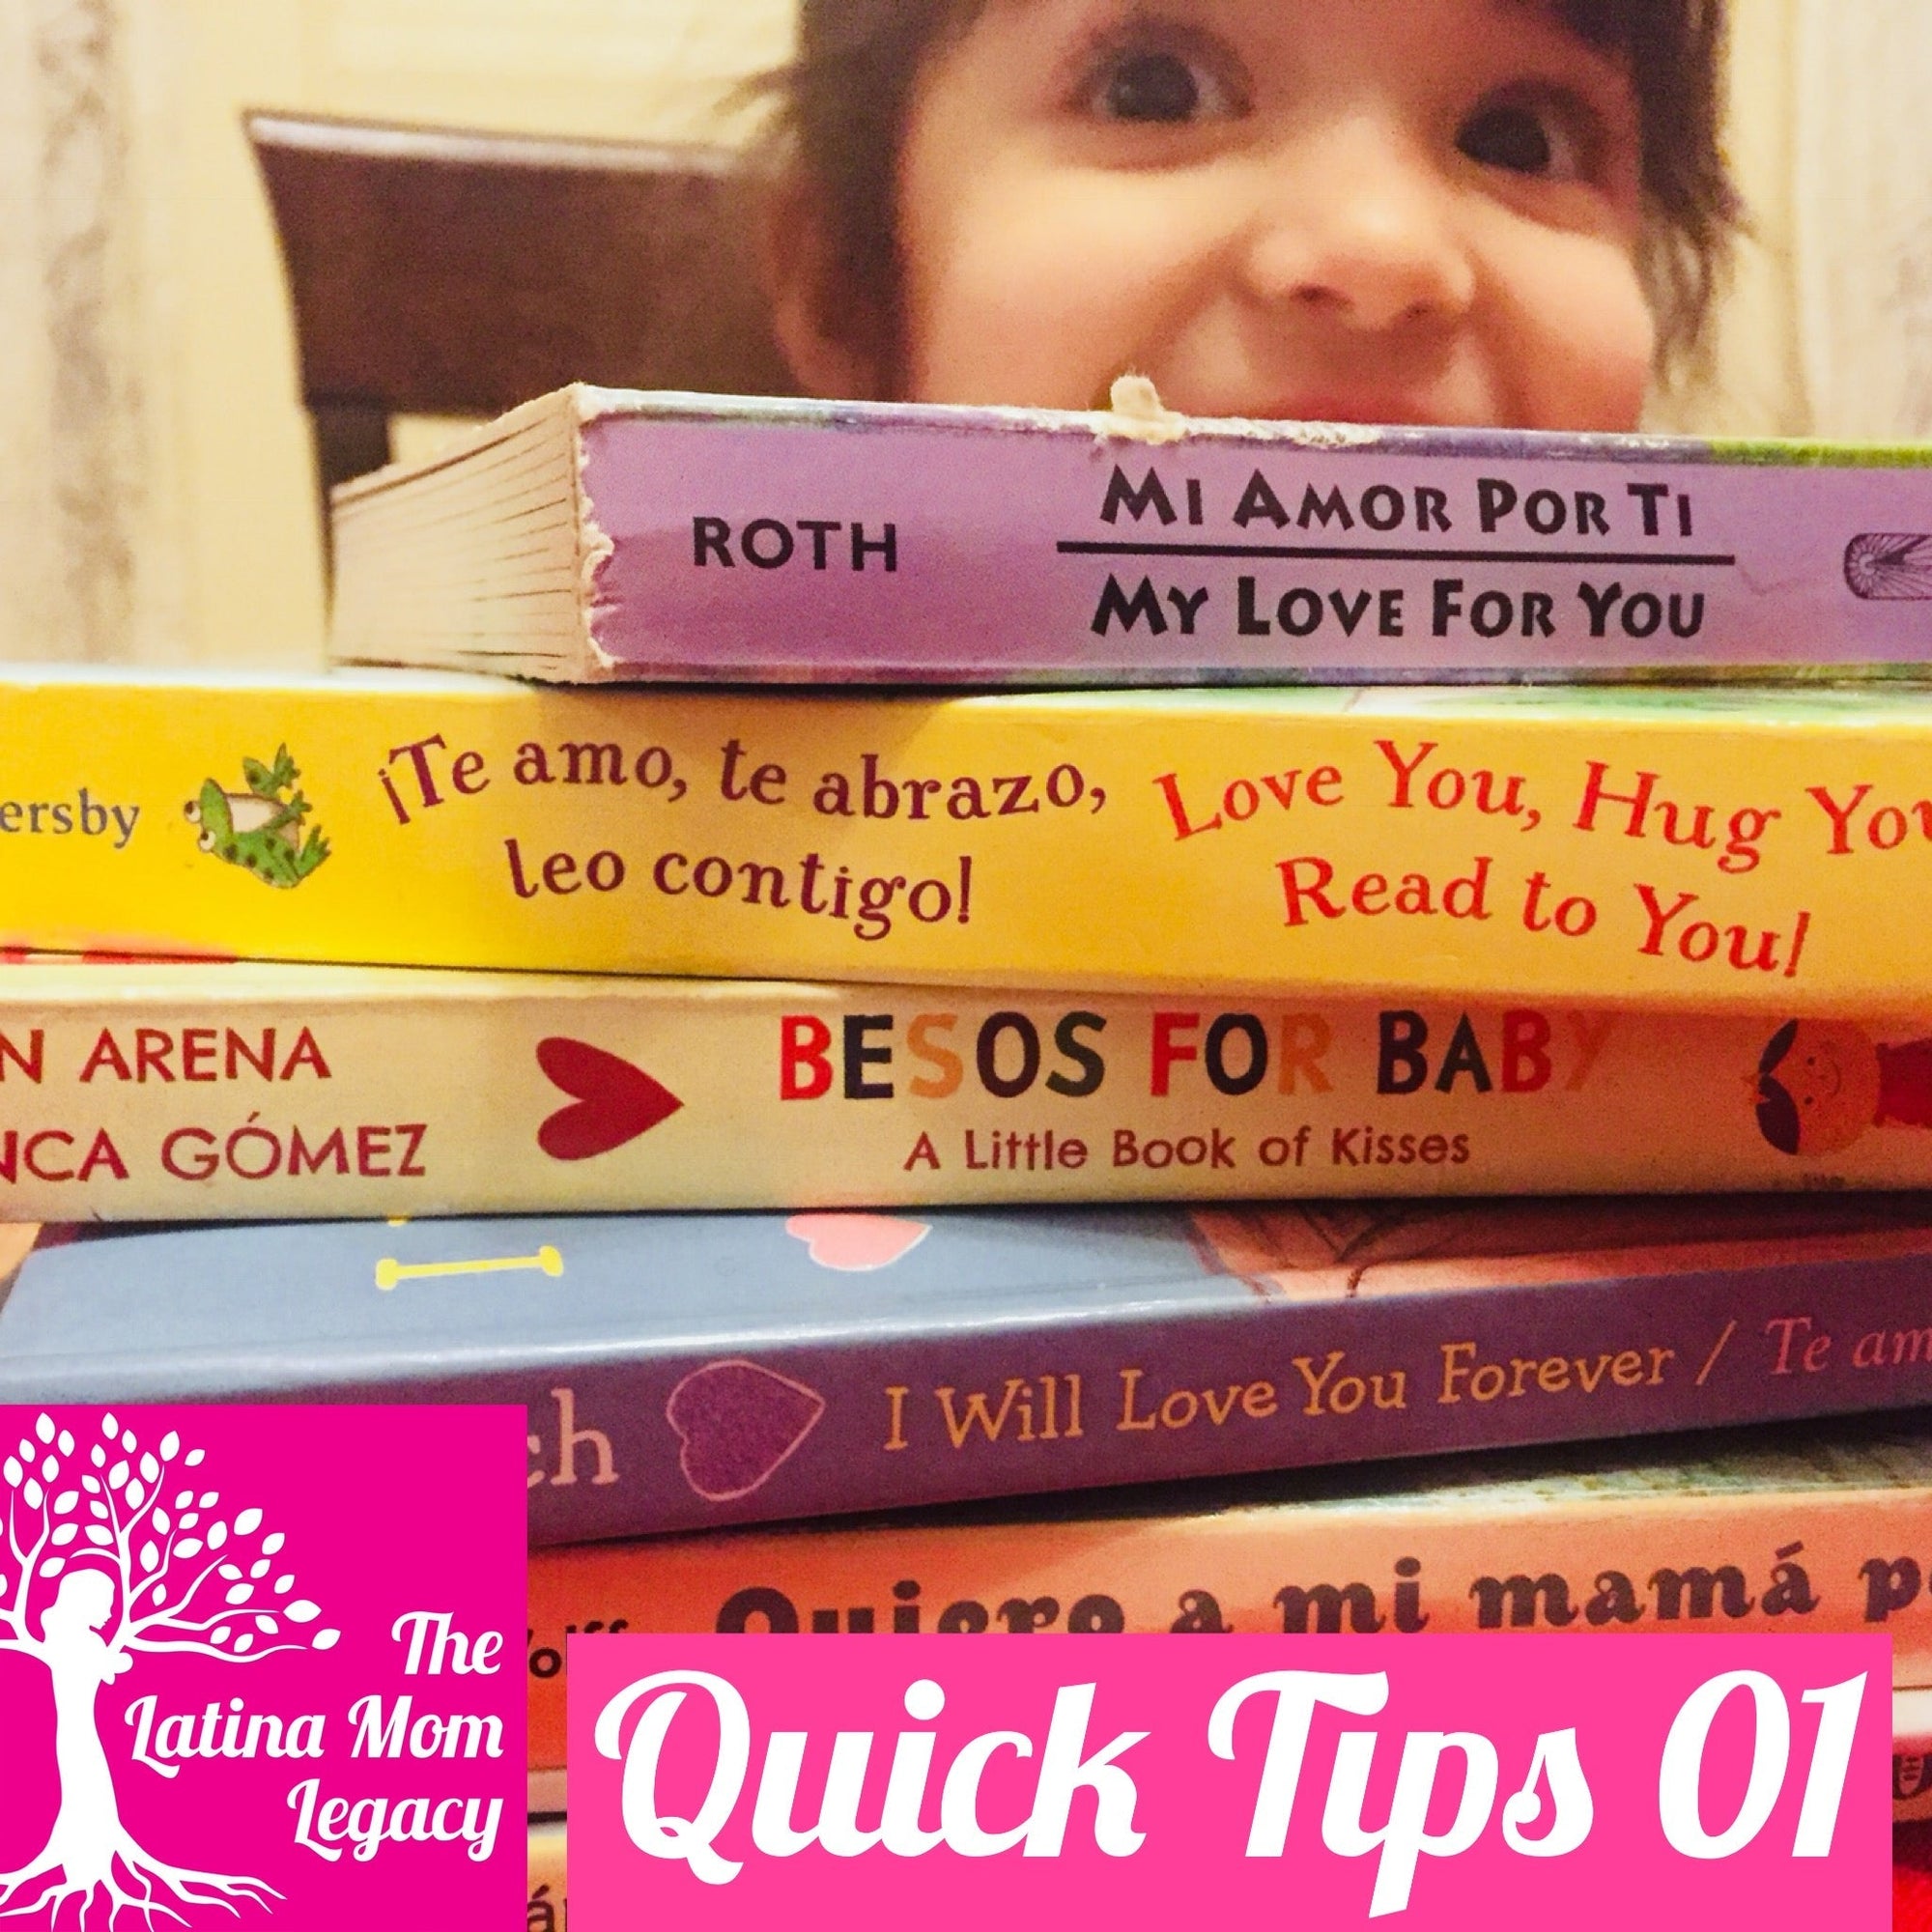 The Latina Mom Legacy Quick Tip 01 - 1000 Books Before Kindergarten App - Mi LegaSi